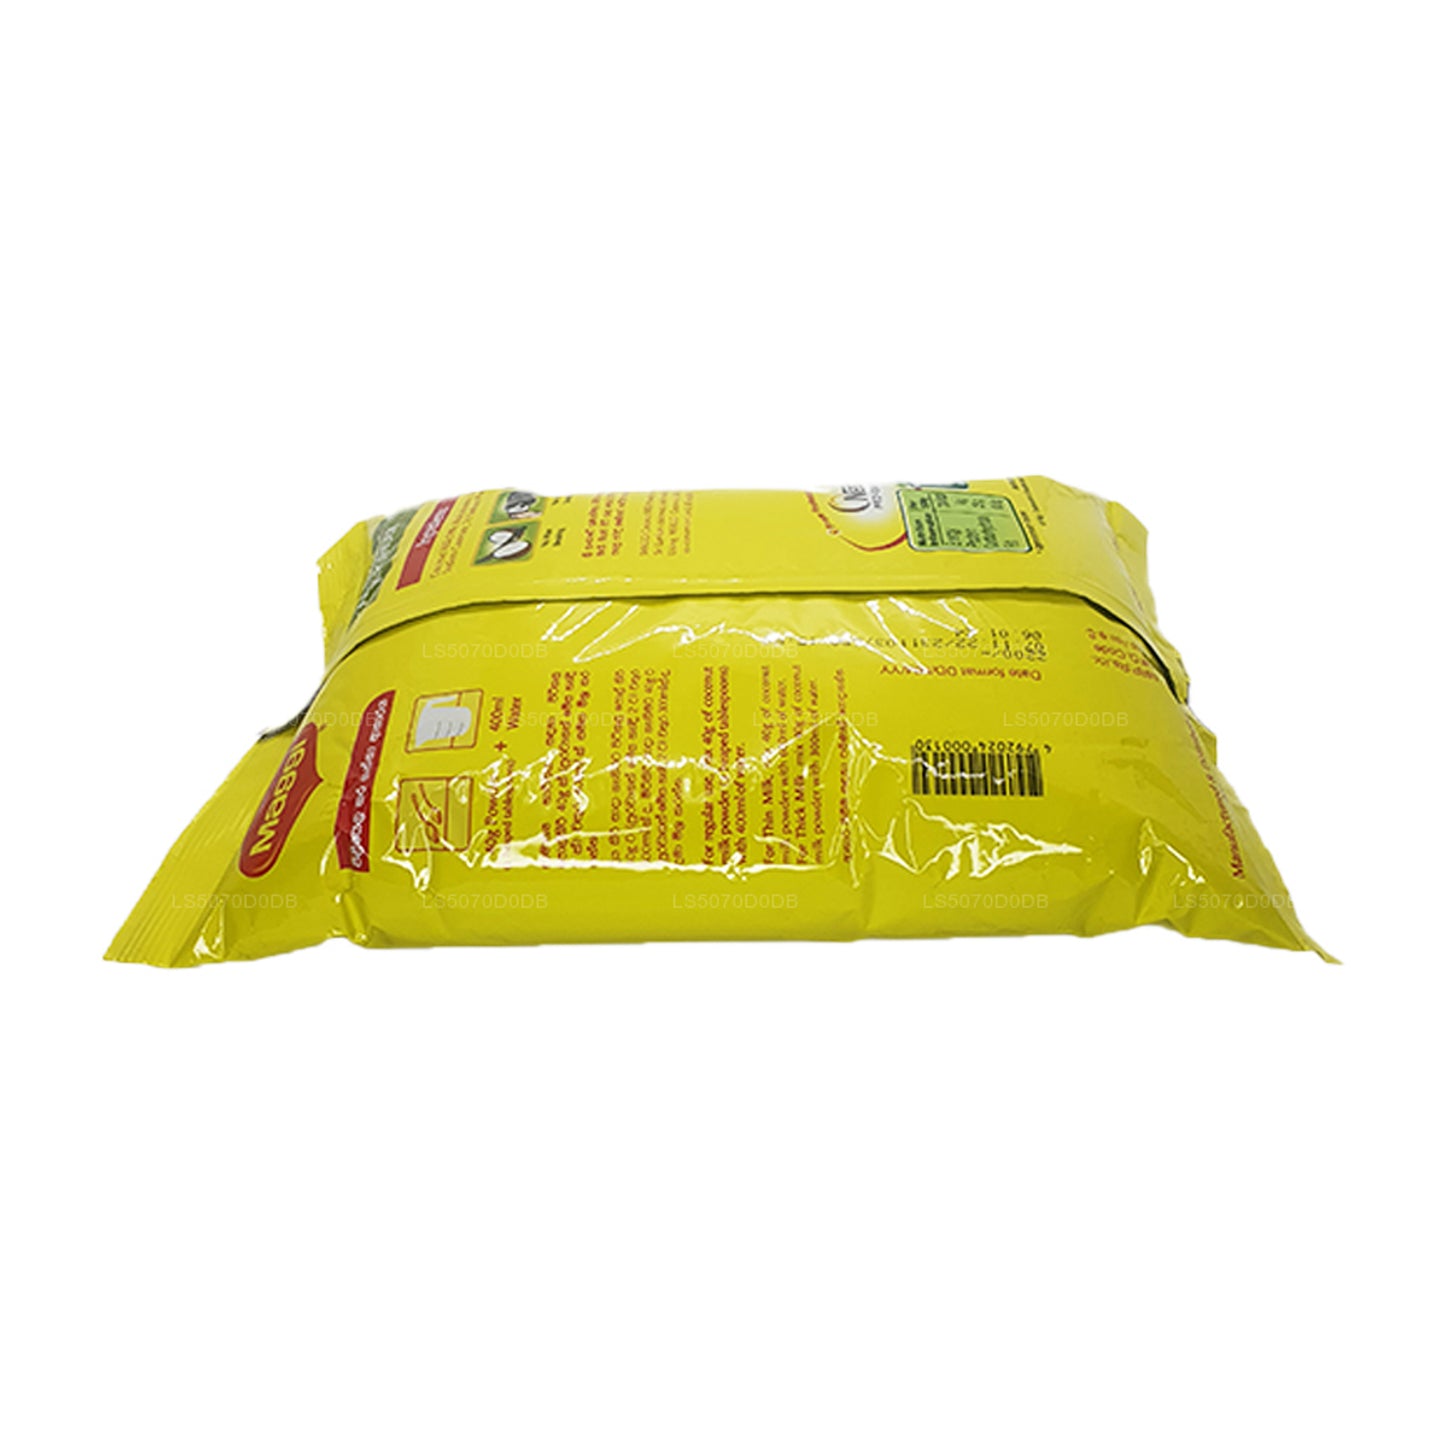 Maggi Coconut Milk Powder (1kg)